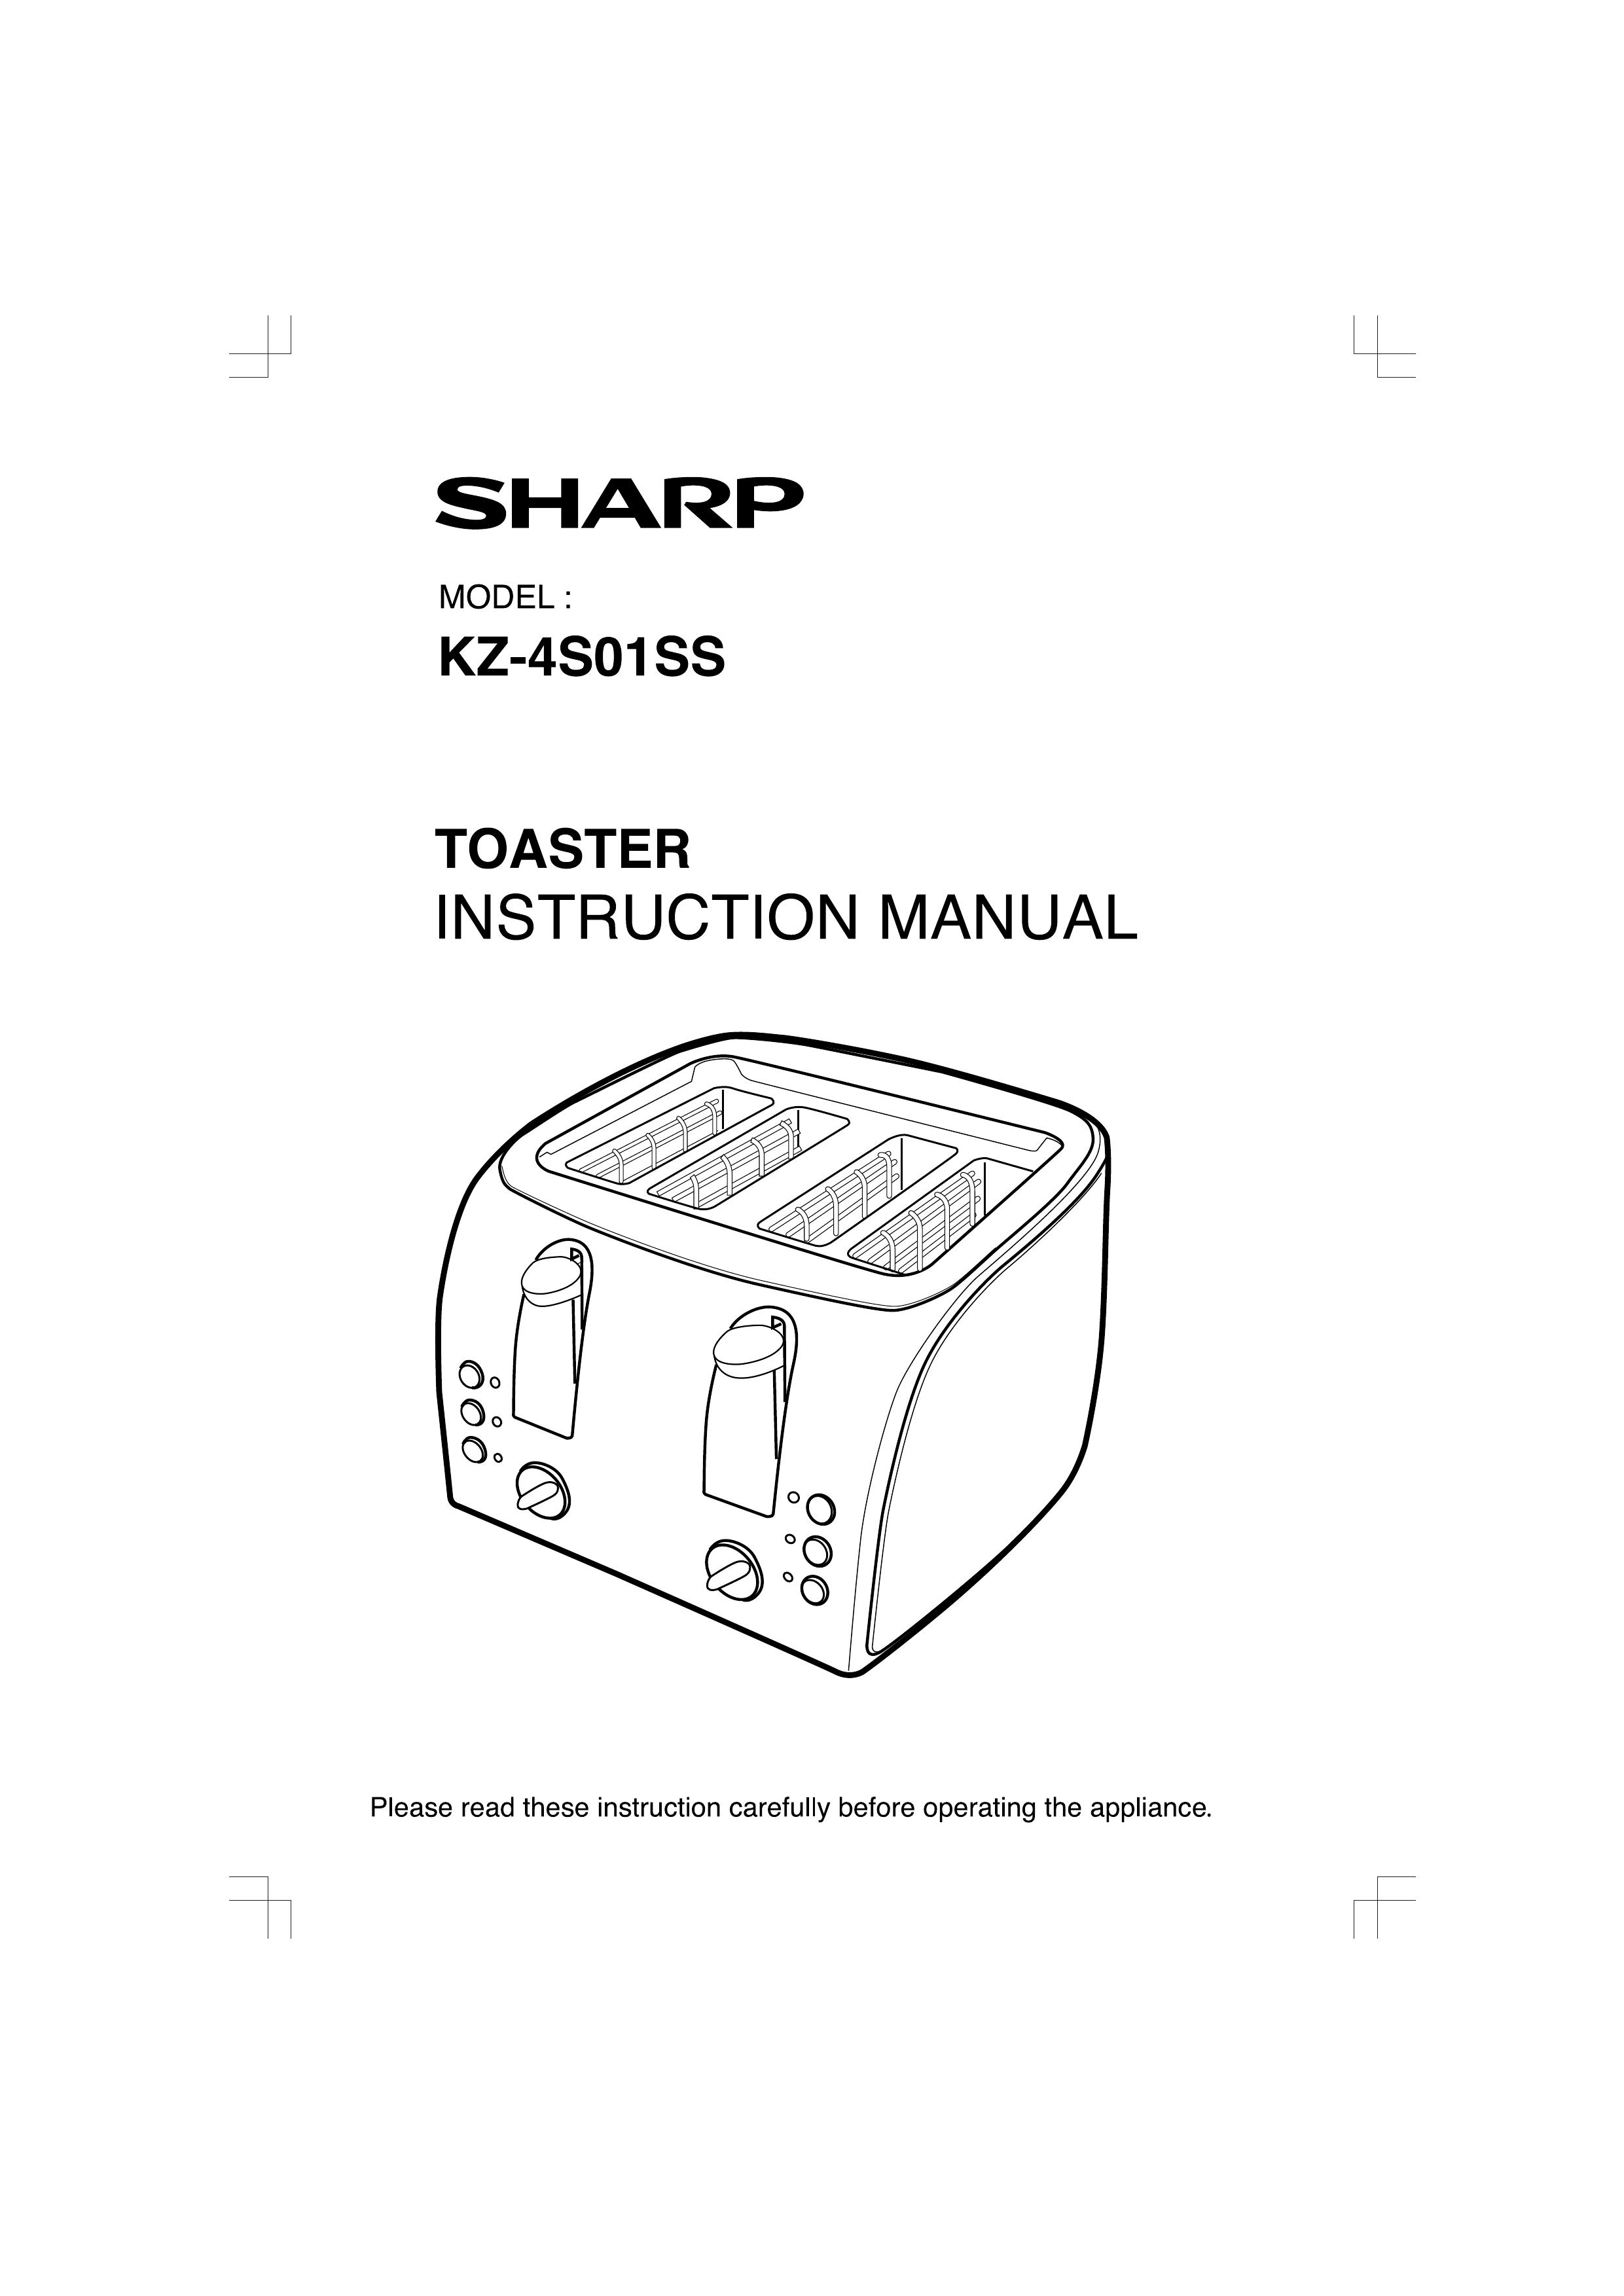 Sharp KZ-4S01SS Toaster User Manual